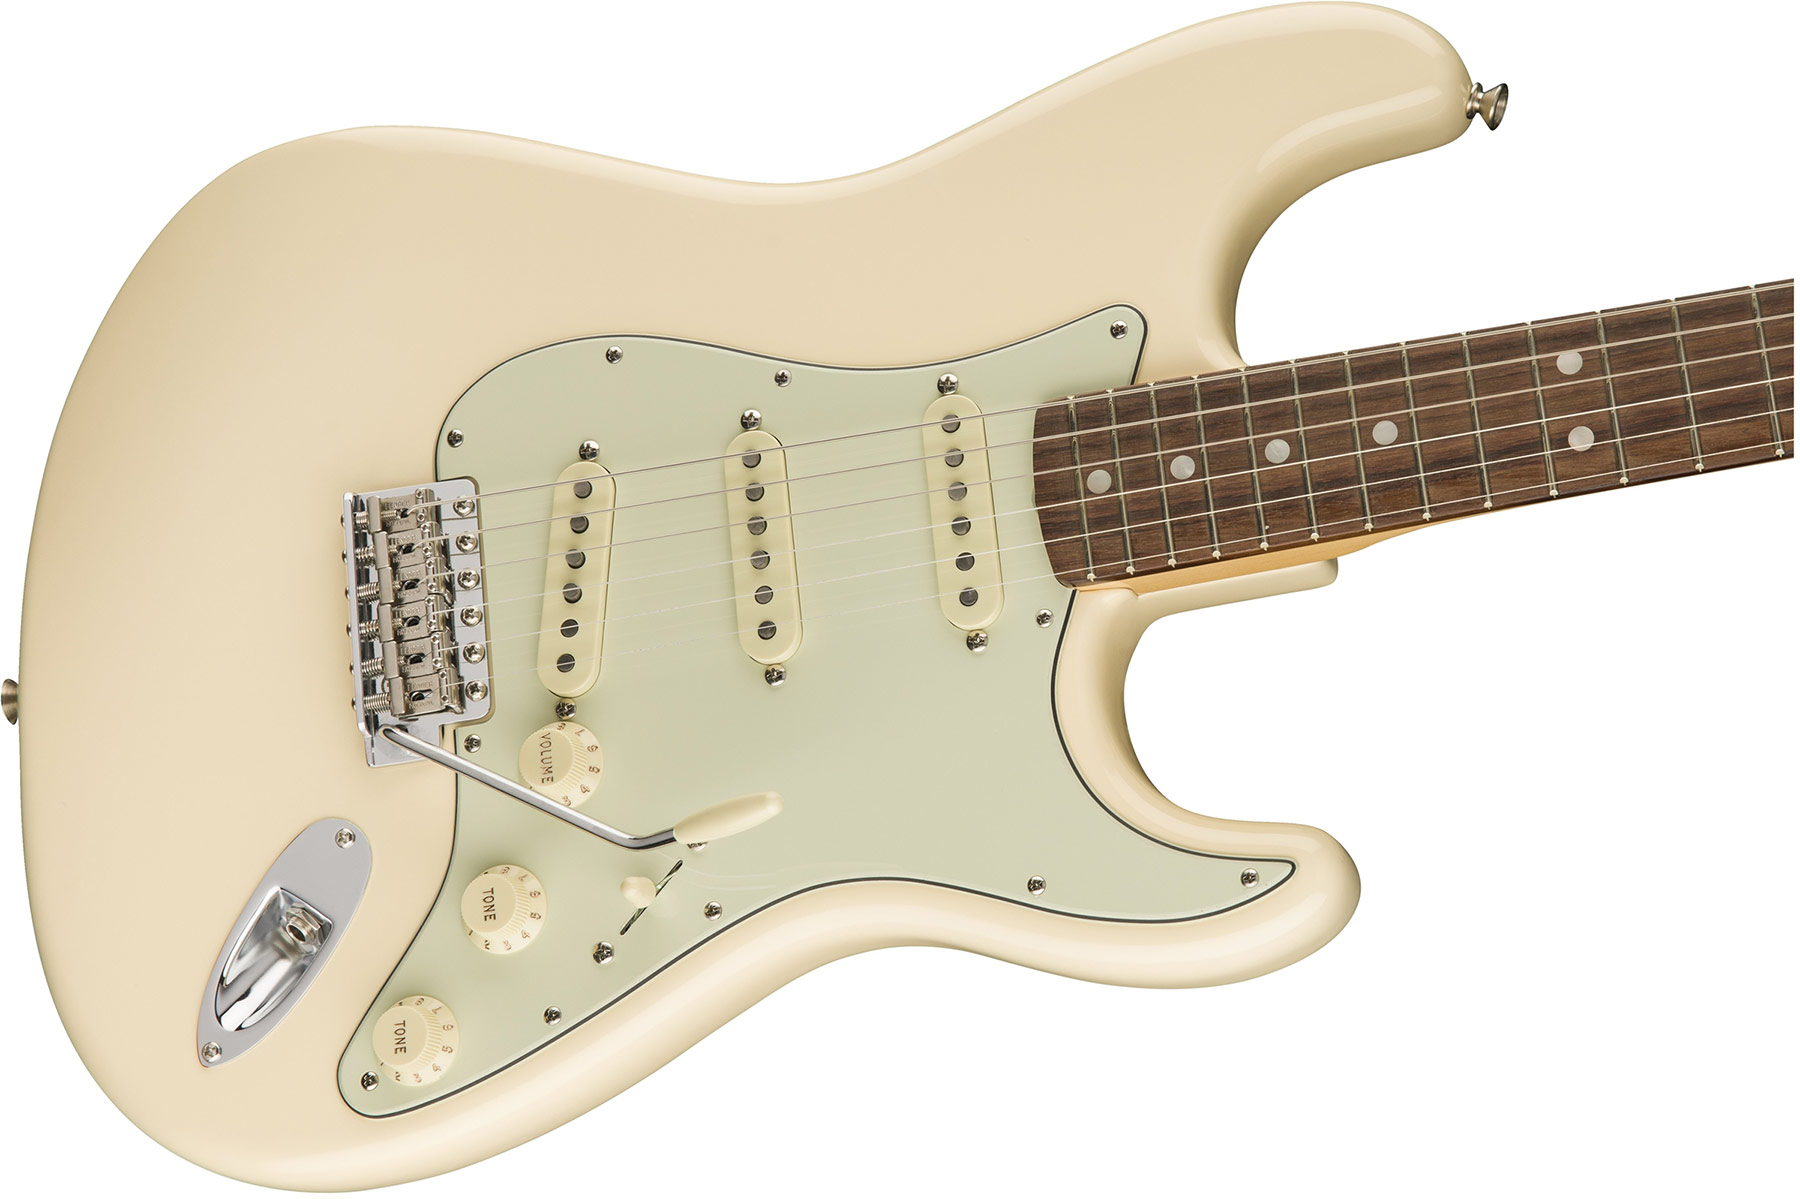 Fender Strat '60s Lh Gaucher American Original Usa Sss Rw - Olympic White - Left-handed electric guitar - Variation 3